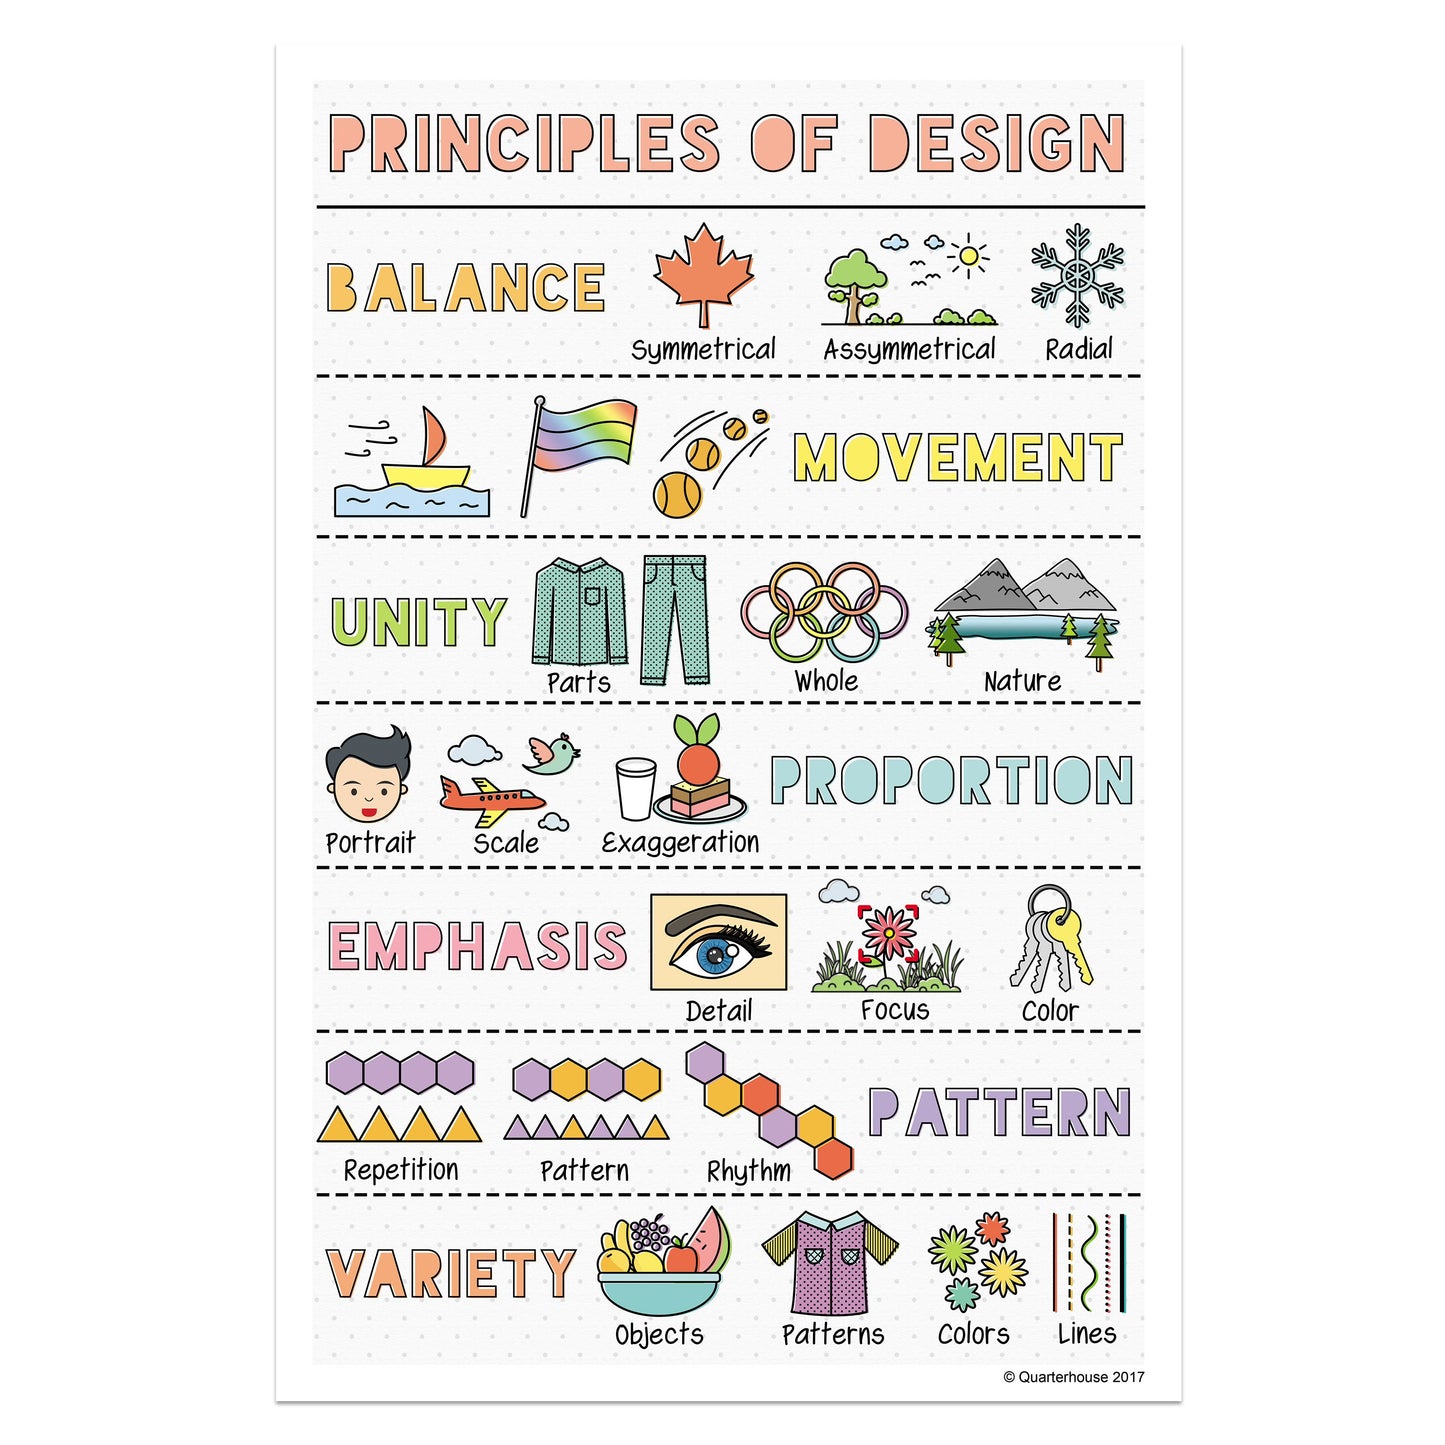 Quarterhouse Principles of Design - Summary Poster, Art Classroom Materials for Teachers